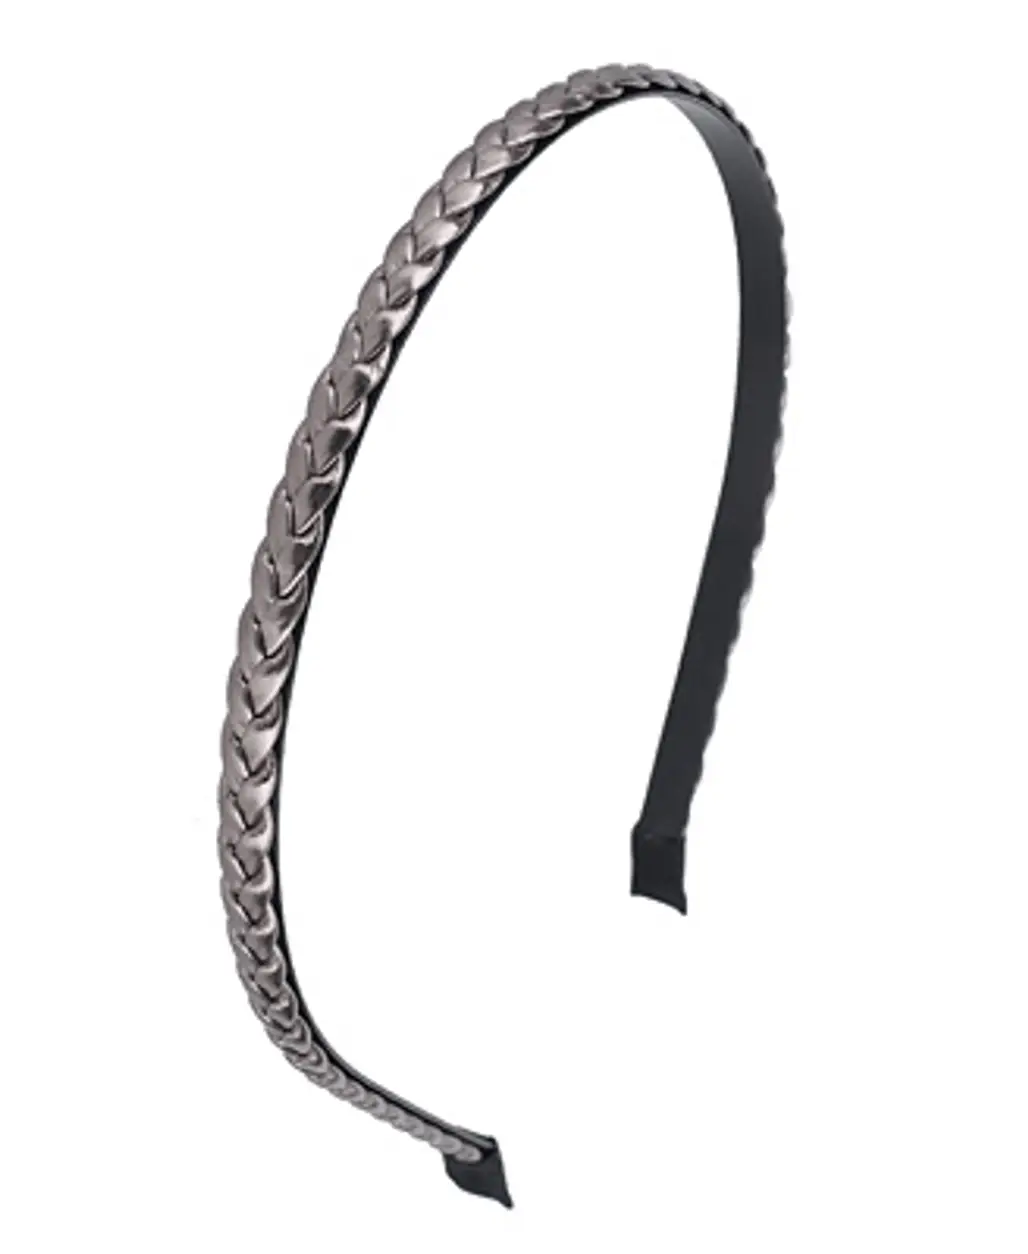 Metallic Braid Headband